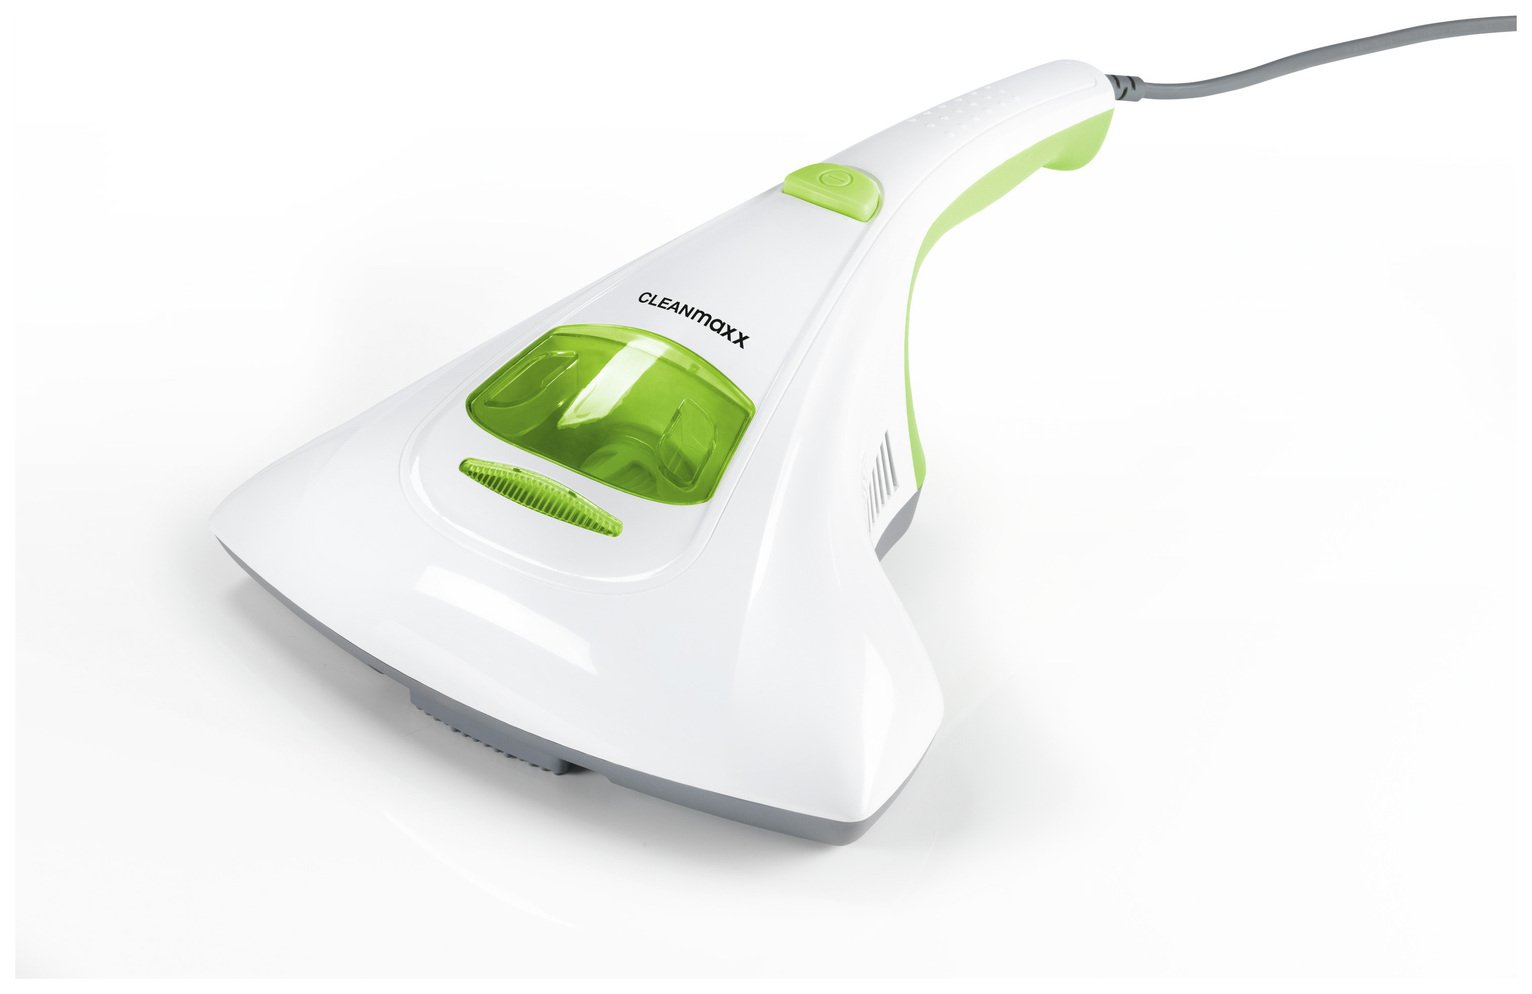 Cleanmaxx Anti Dust Mites Handheld Vacuum Cleaner review